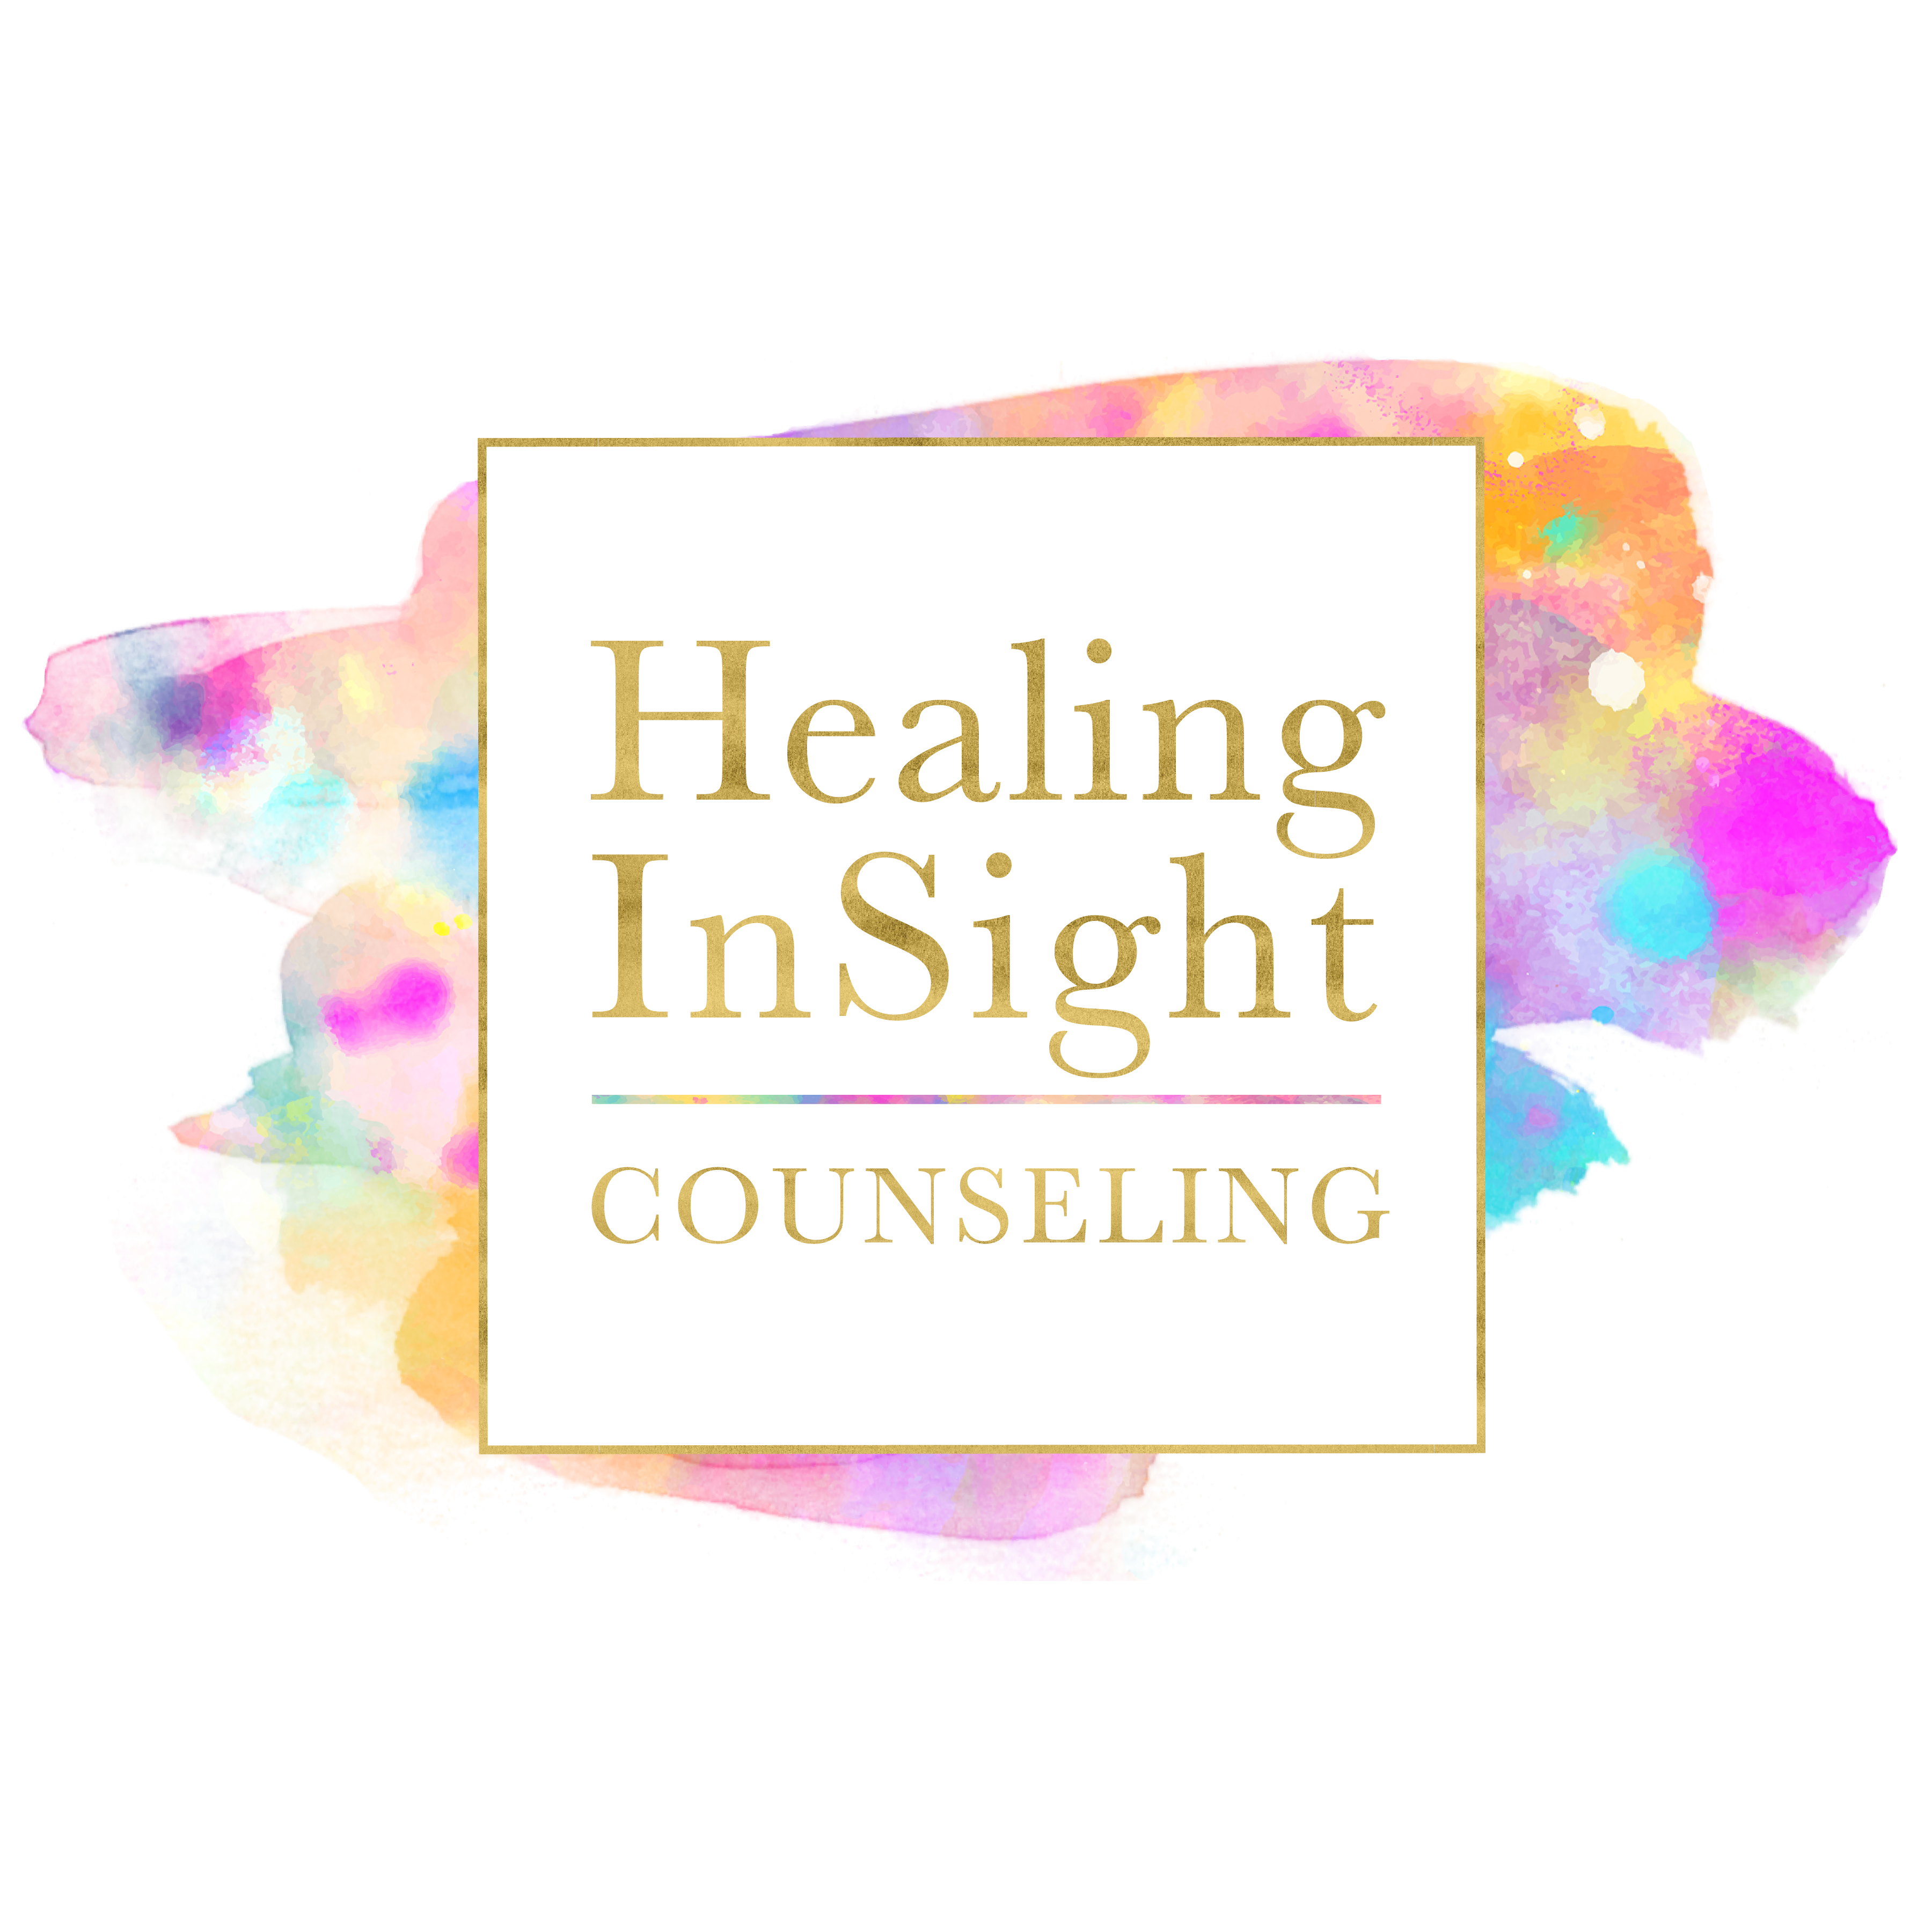 Healing Insight Counseling